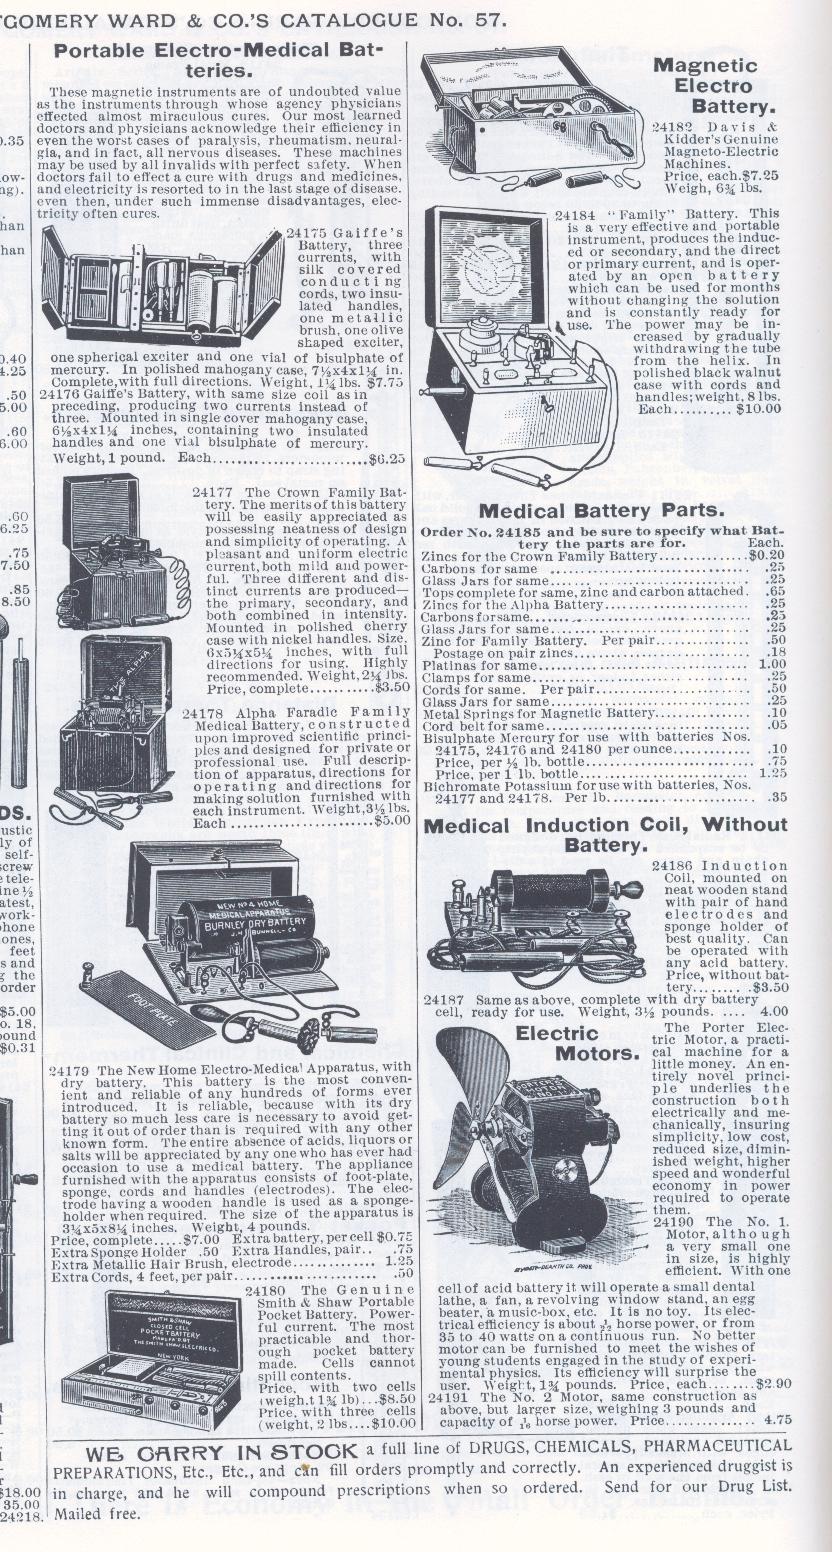 Wards 1895 Catalogue page